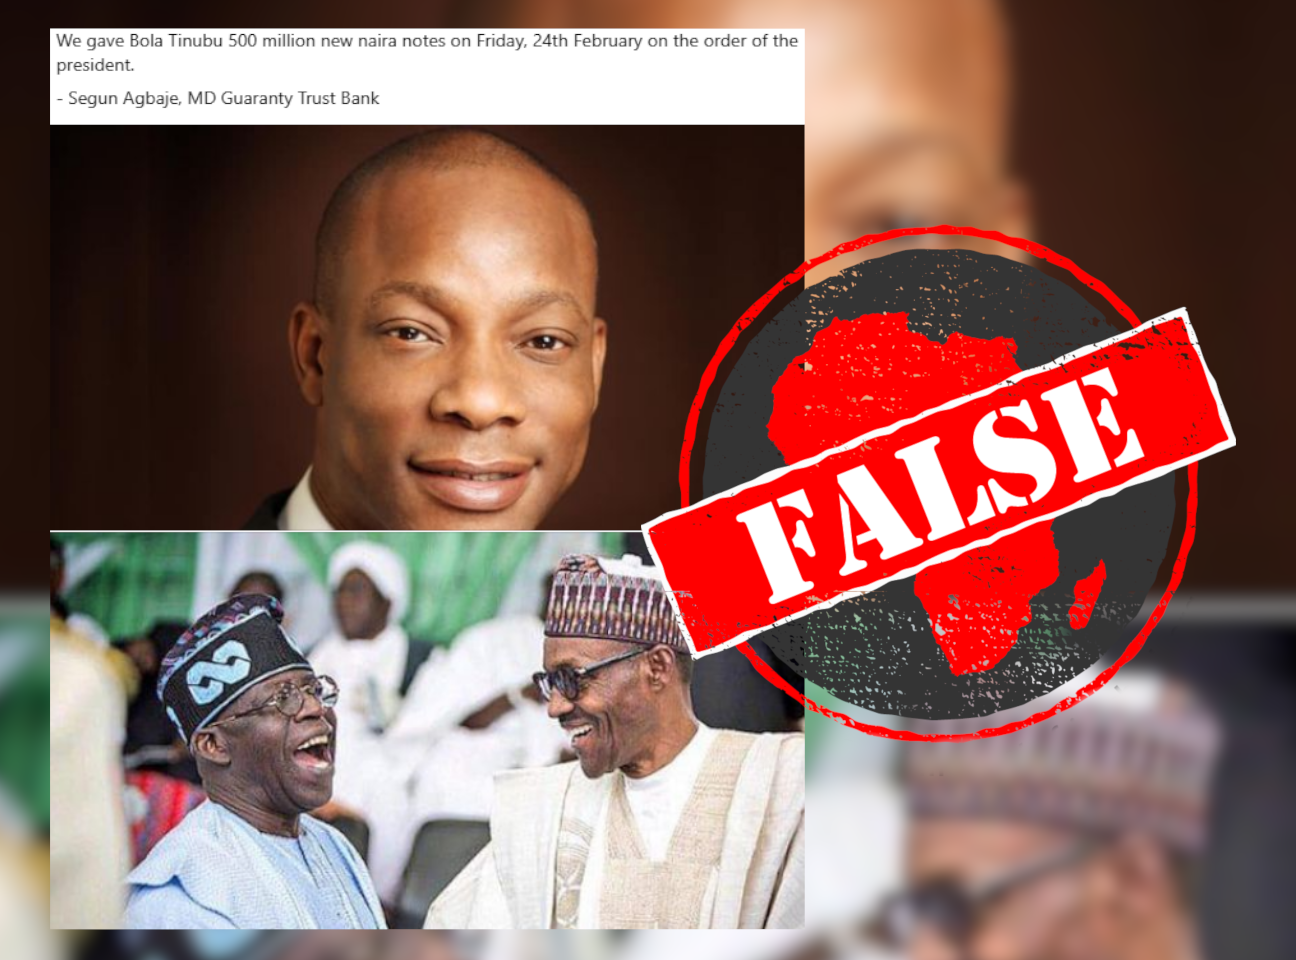 NigeriaBank_False